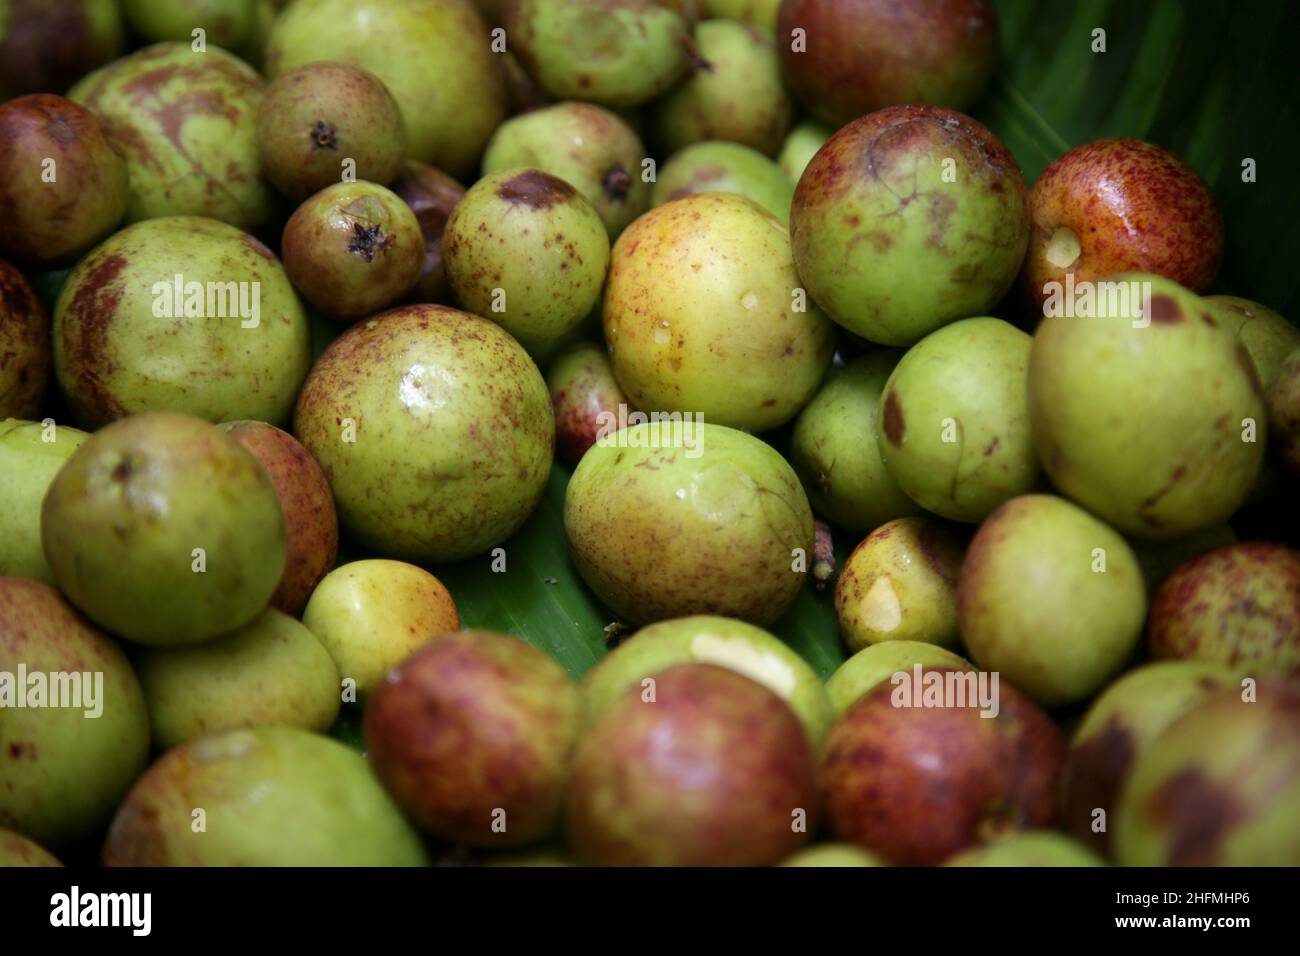 conde, bahia, brazil - january 8, 2022: Mangaba fruit - Hancornia speciosa - on sale at a fair in the city of Conde. Stock Photo